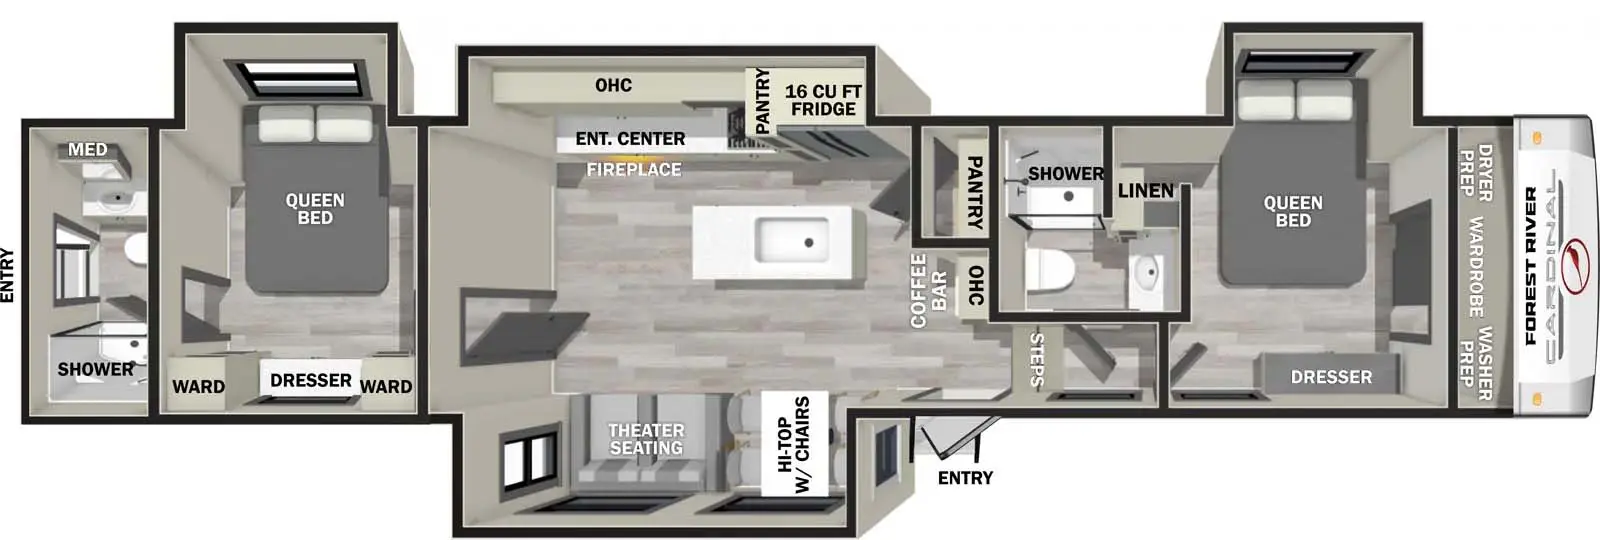 402BEDS Floorplan Image